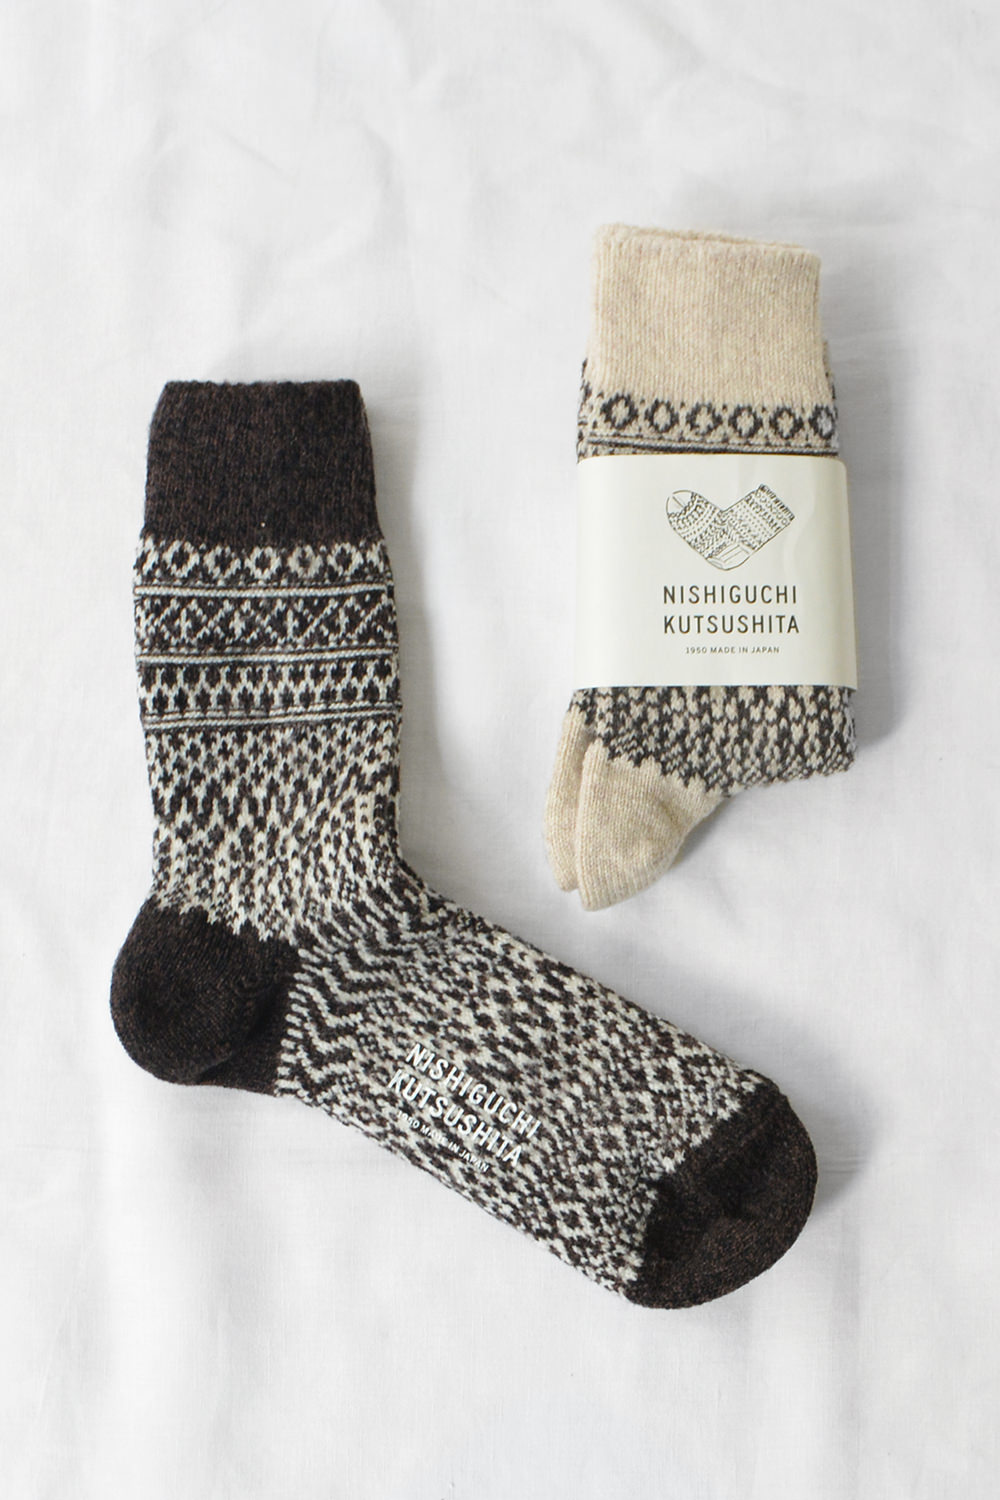 Nishiguchi Wool Socks top Pictures